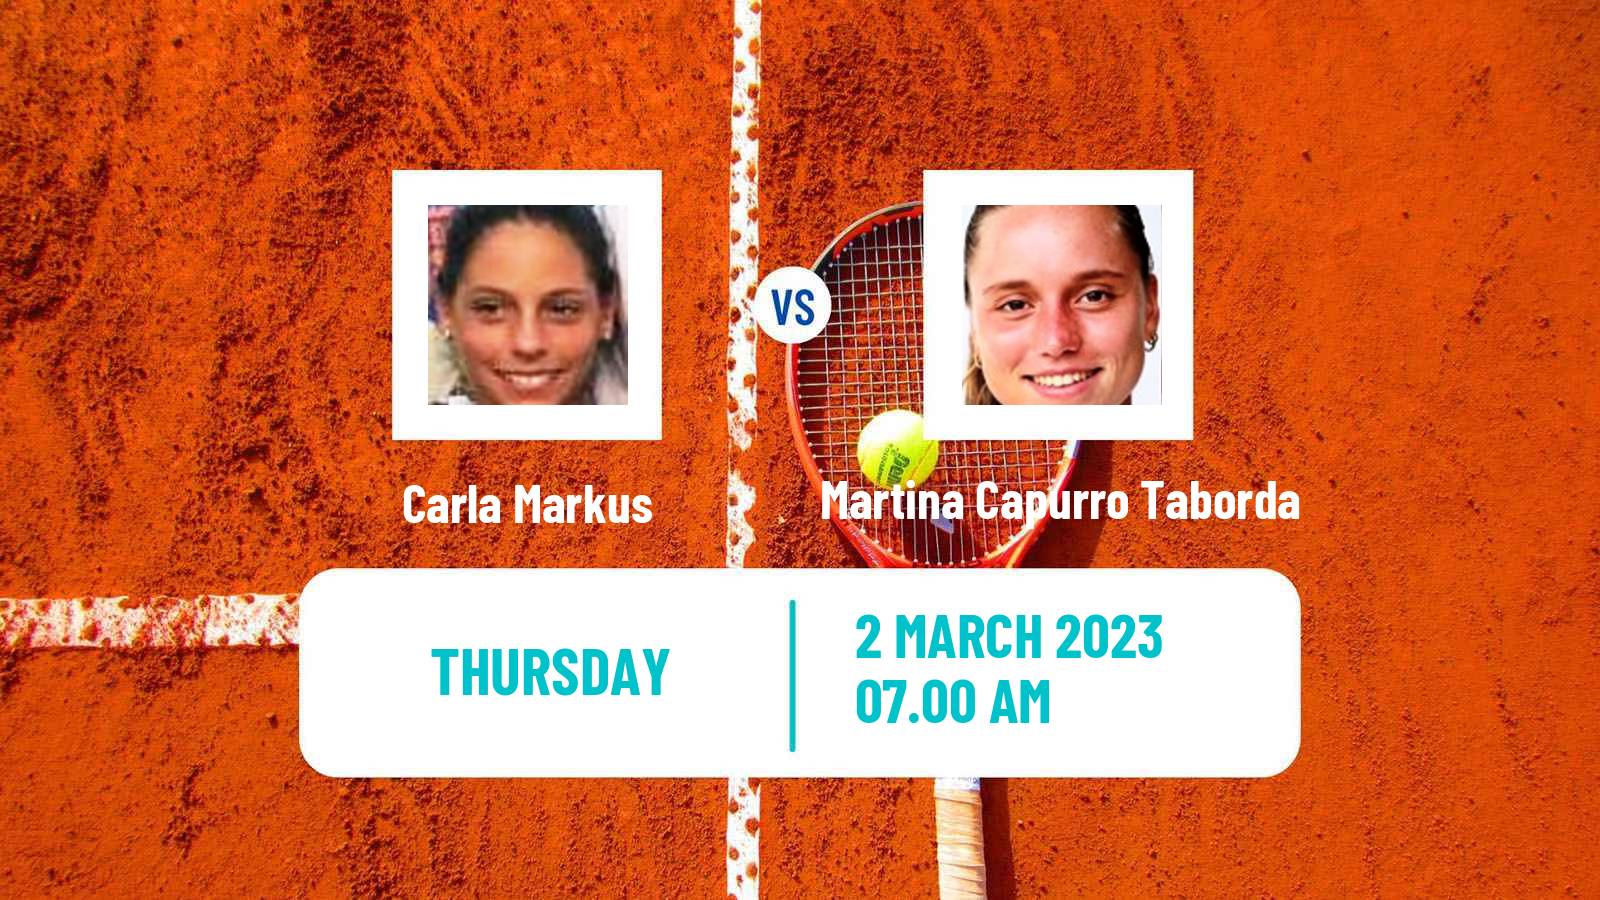 Tennis ITF Tournaments Carla Markus - Martina Capurro Taborda